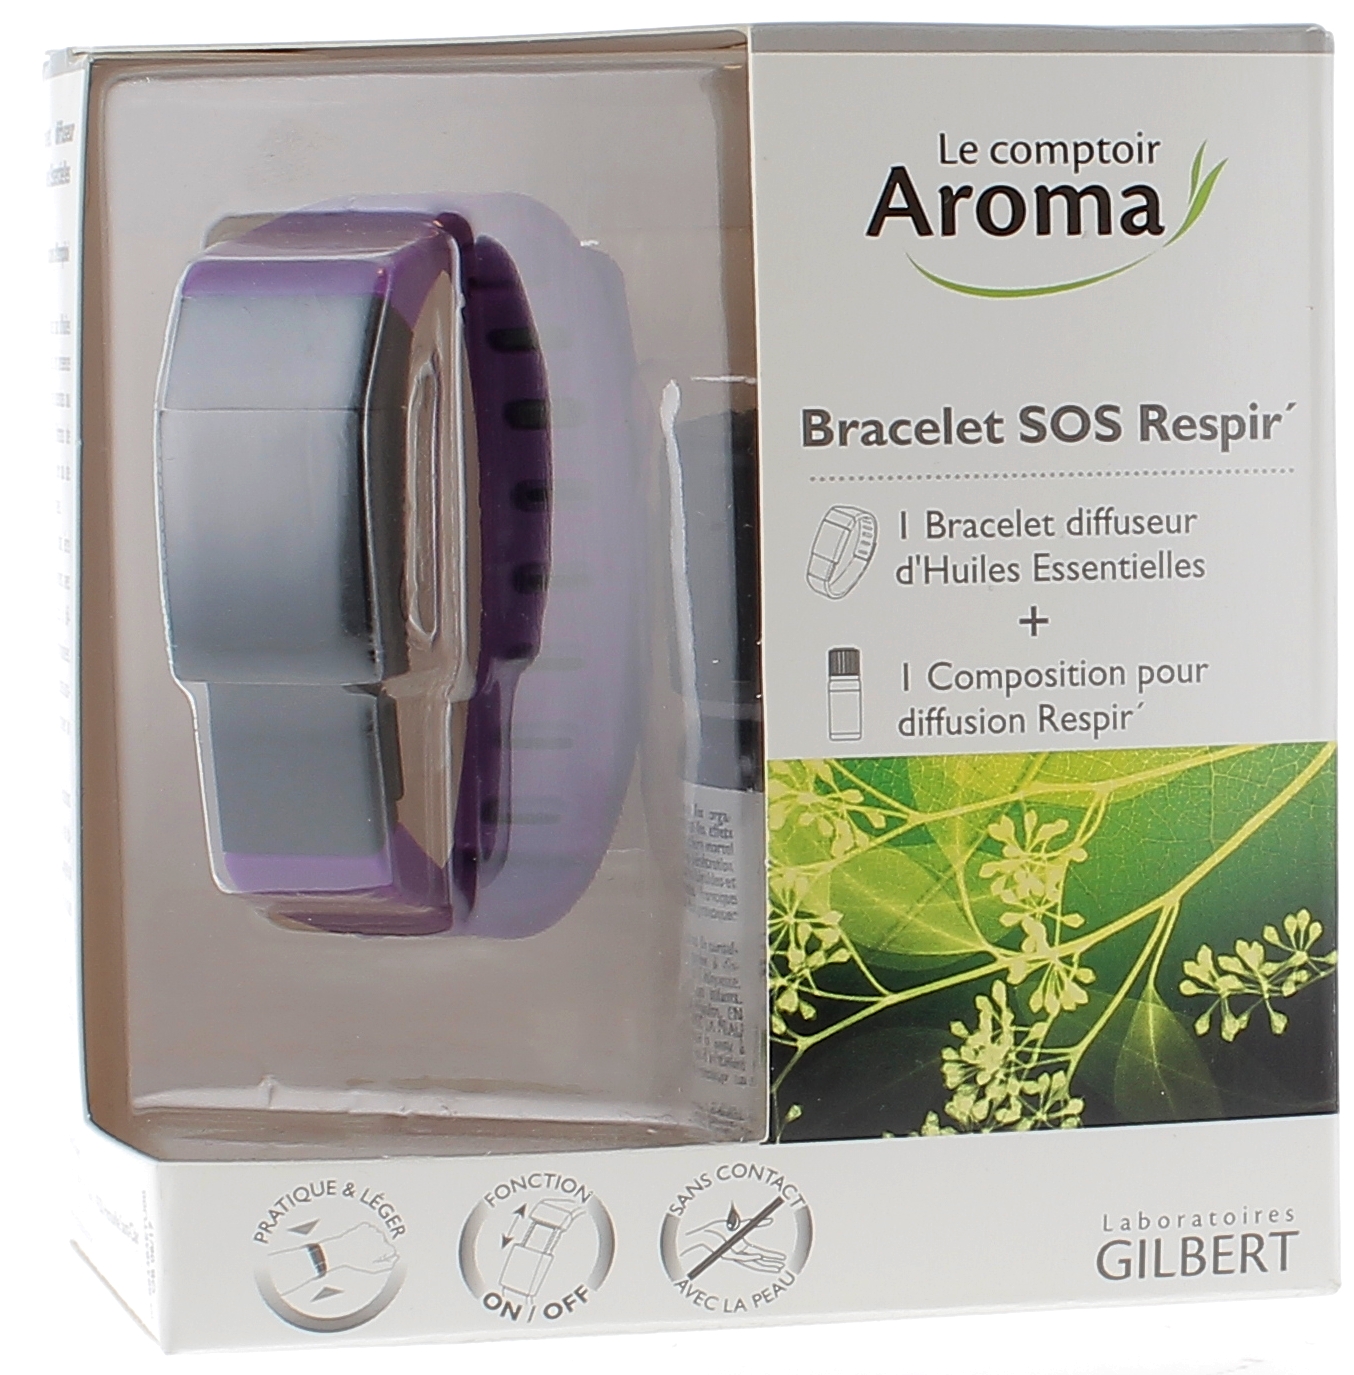 Bracelet SOS Respir' Le comptoir Aroma - 1 bracelet